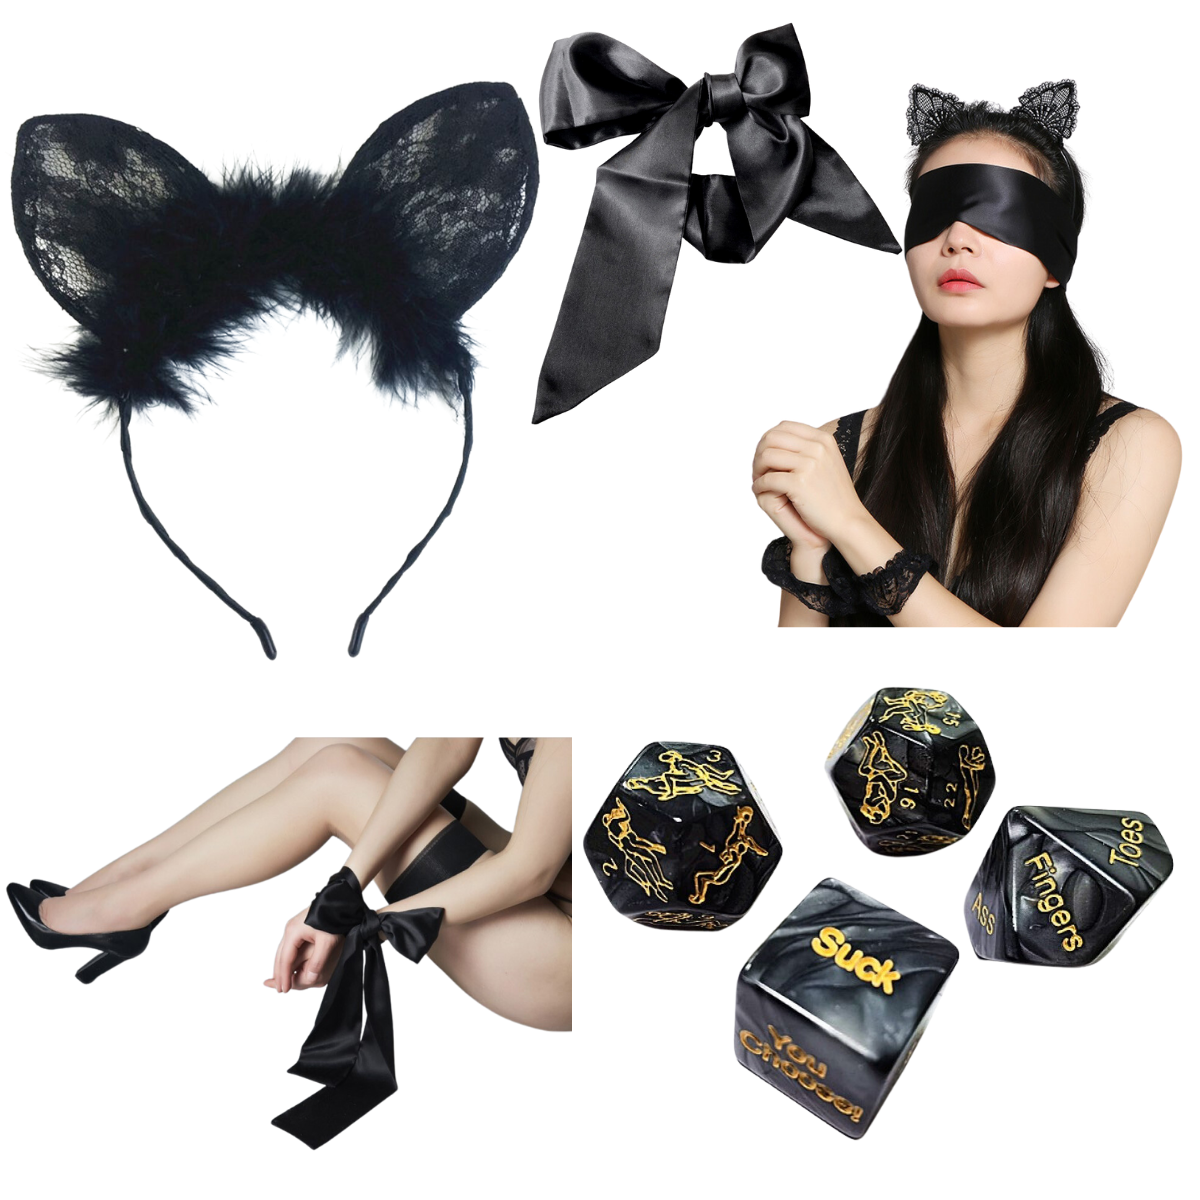 30pcs - Black Kinky Play Dice, Soft Silky Blindfold And Cat Ears Fluffy Headband Set (Total 10 Sets)|GCAPSET036 (GCSM008AP033GCL116)|UK seller